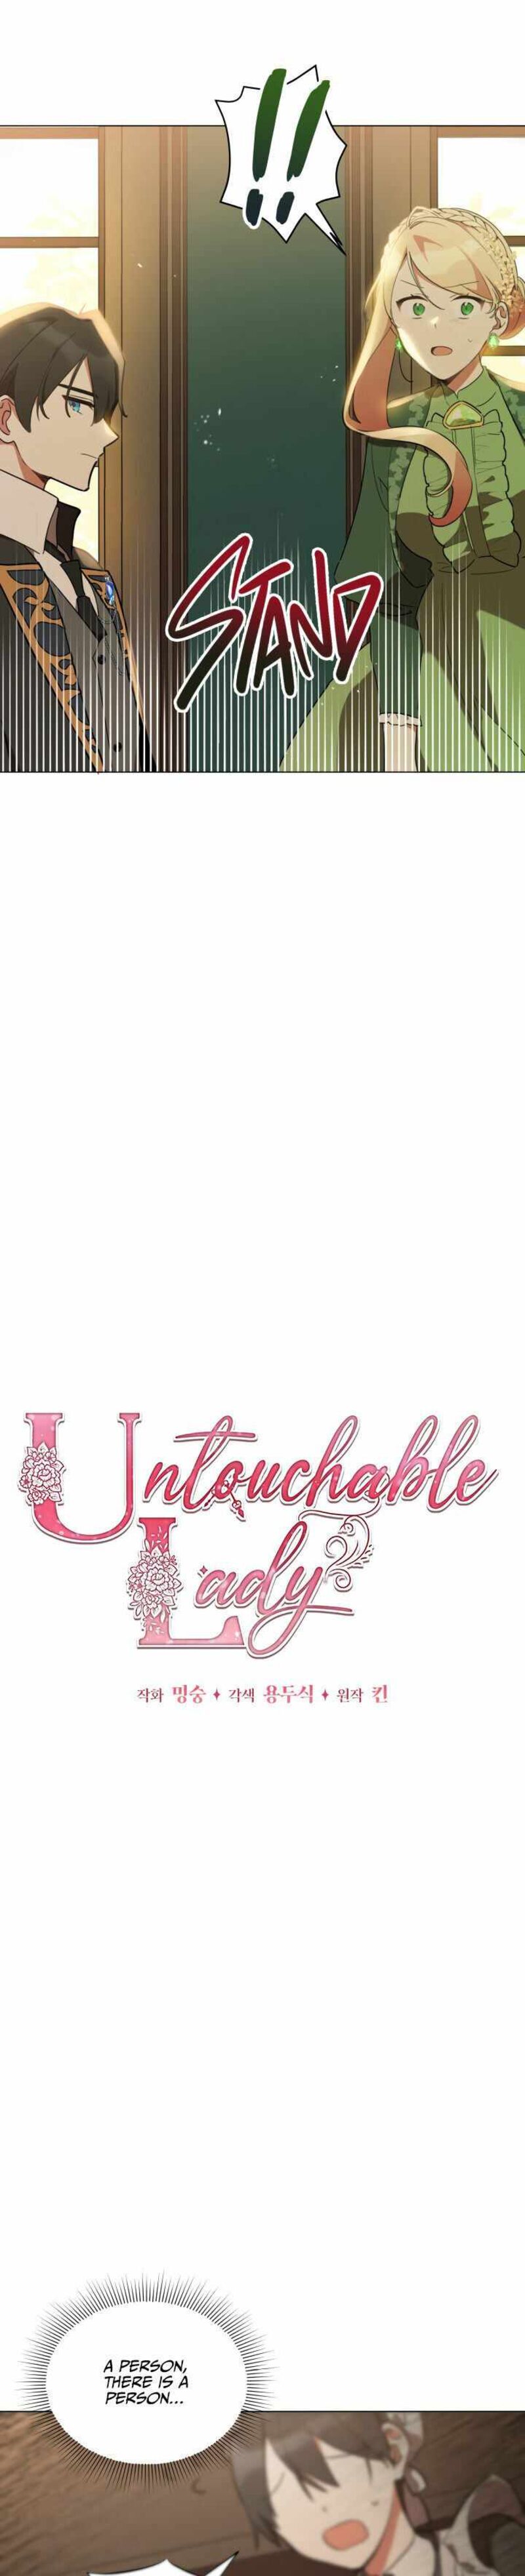 untouchable_lady_15_12